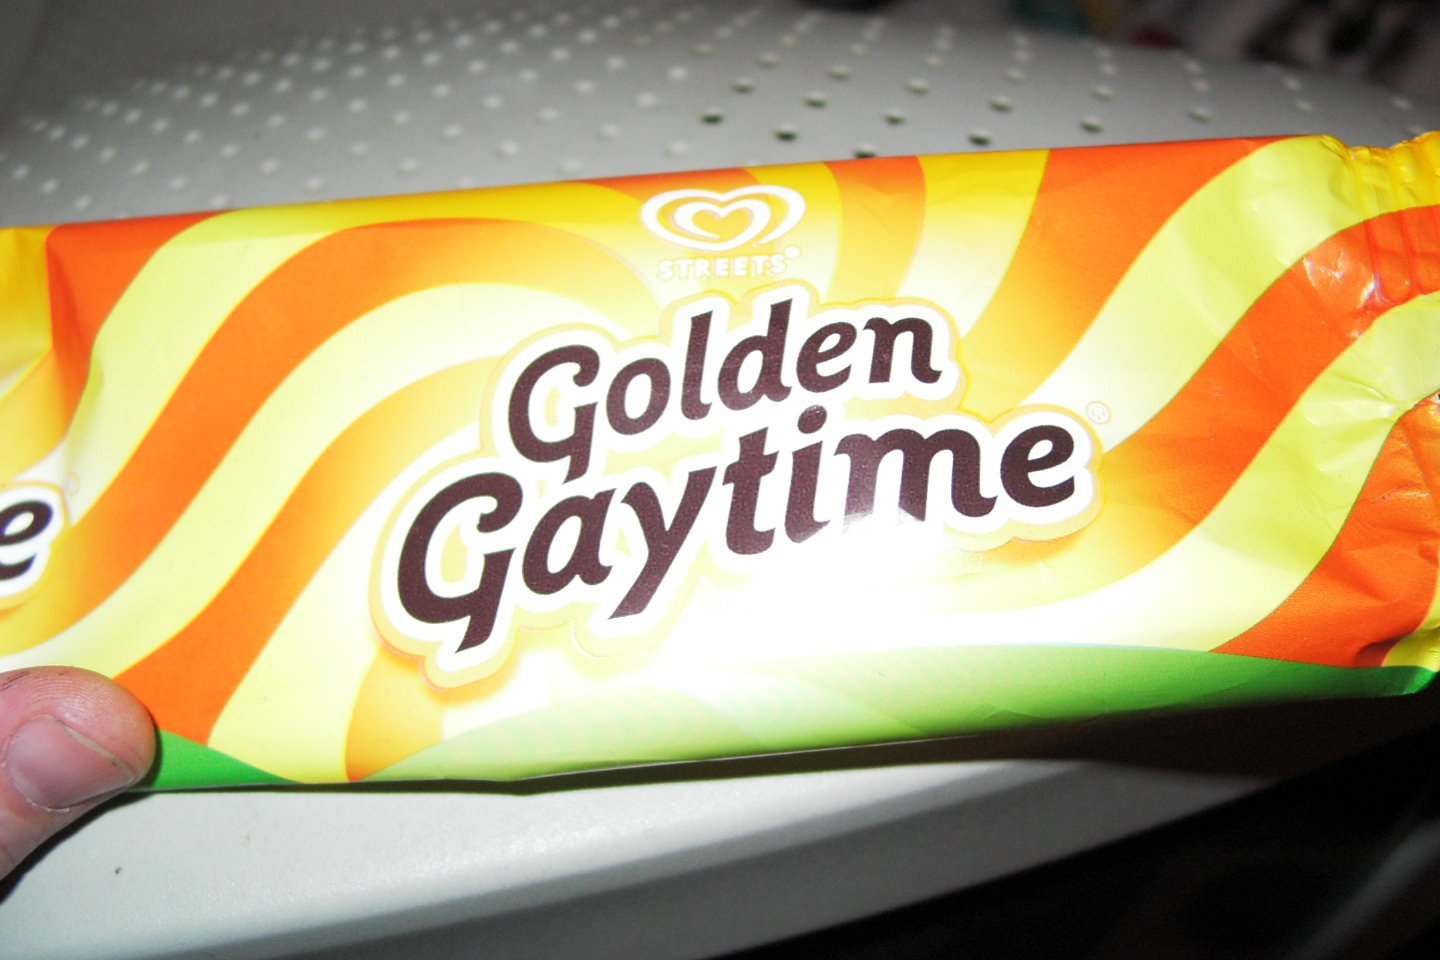 goldengaytime.jpg